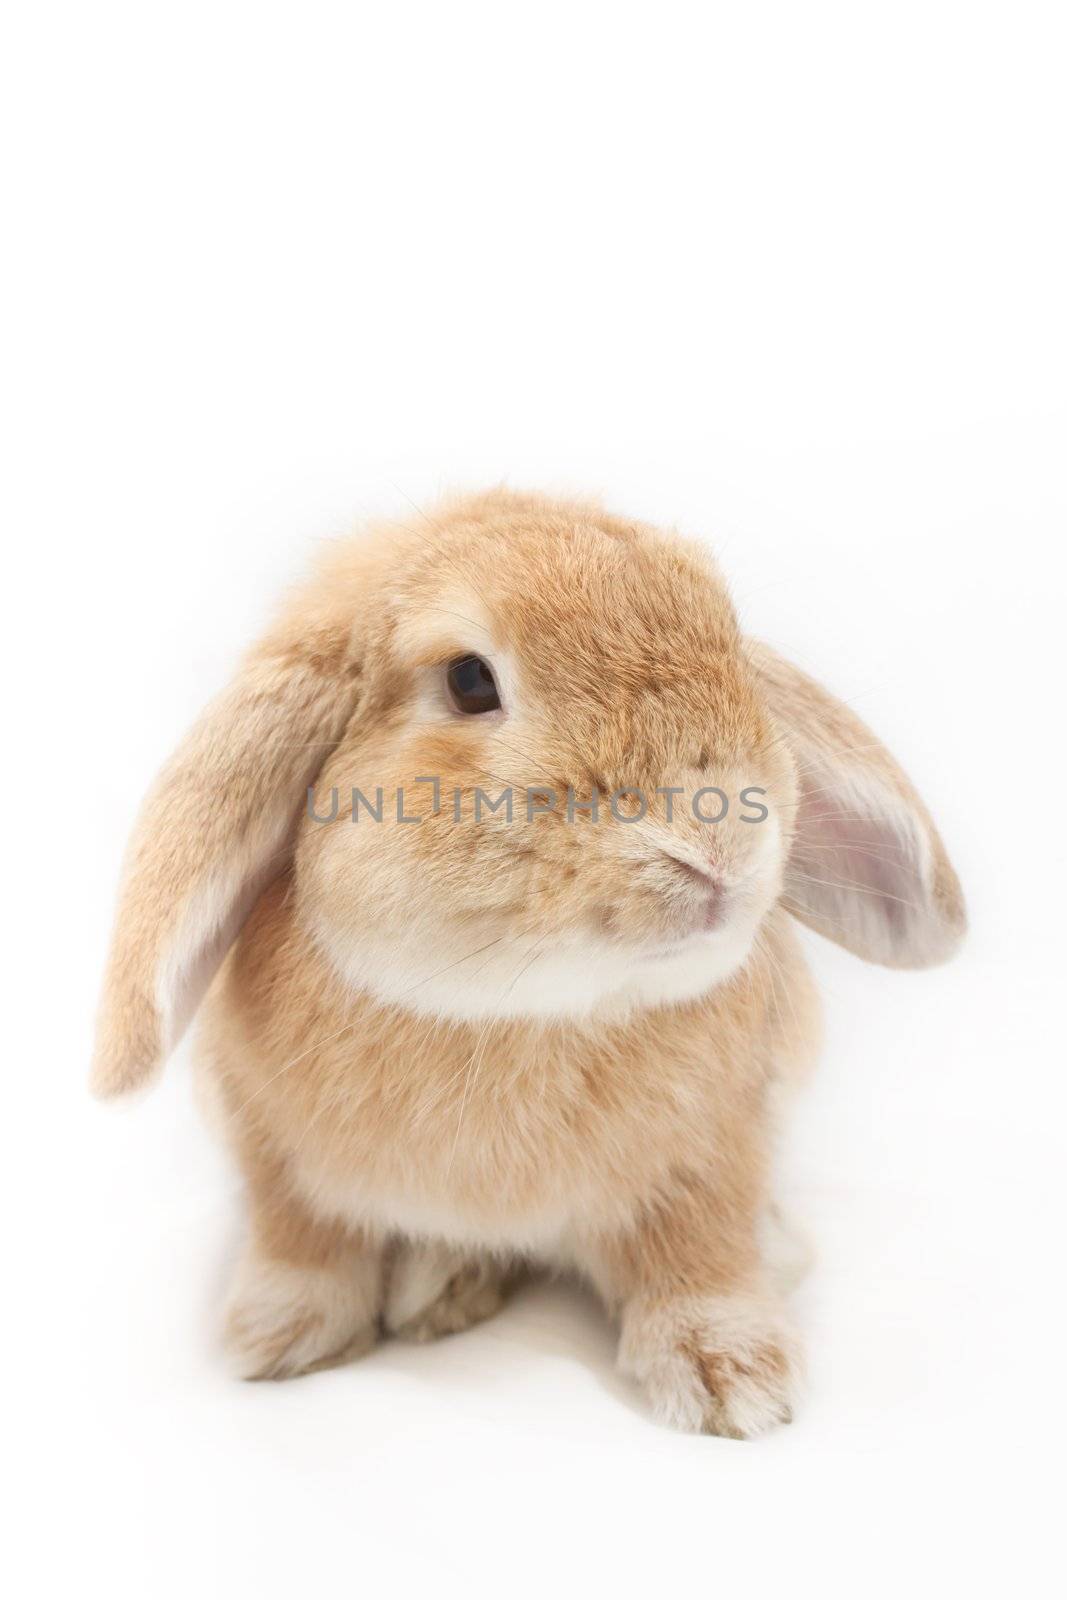 Rabbit by artemisphoto